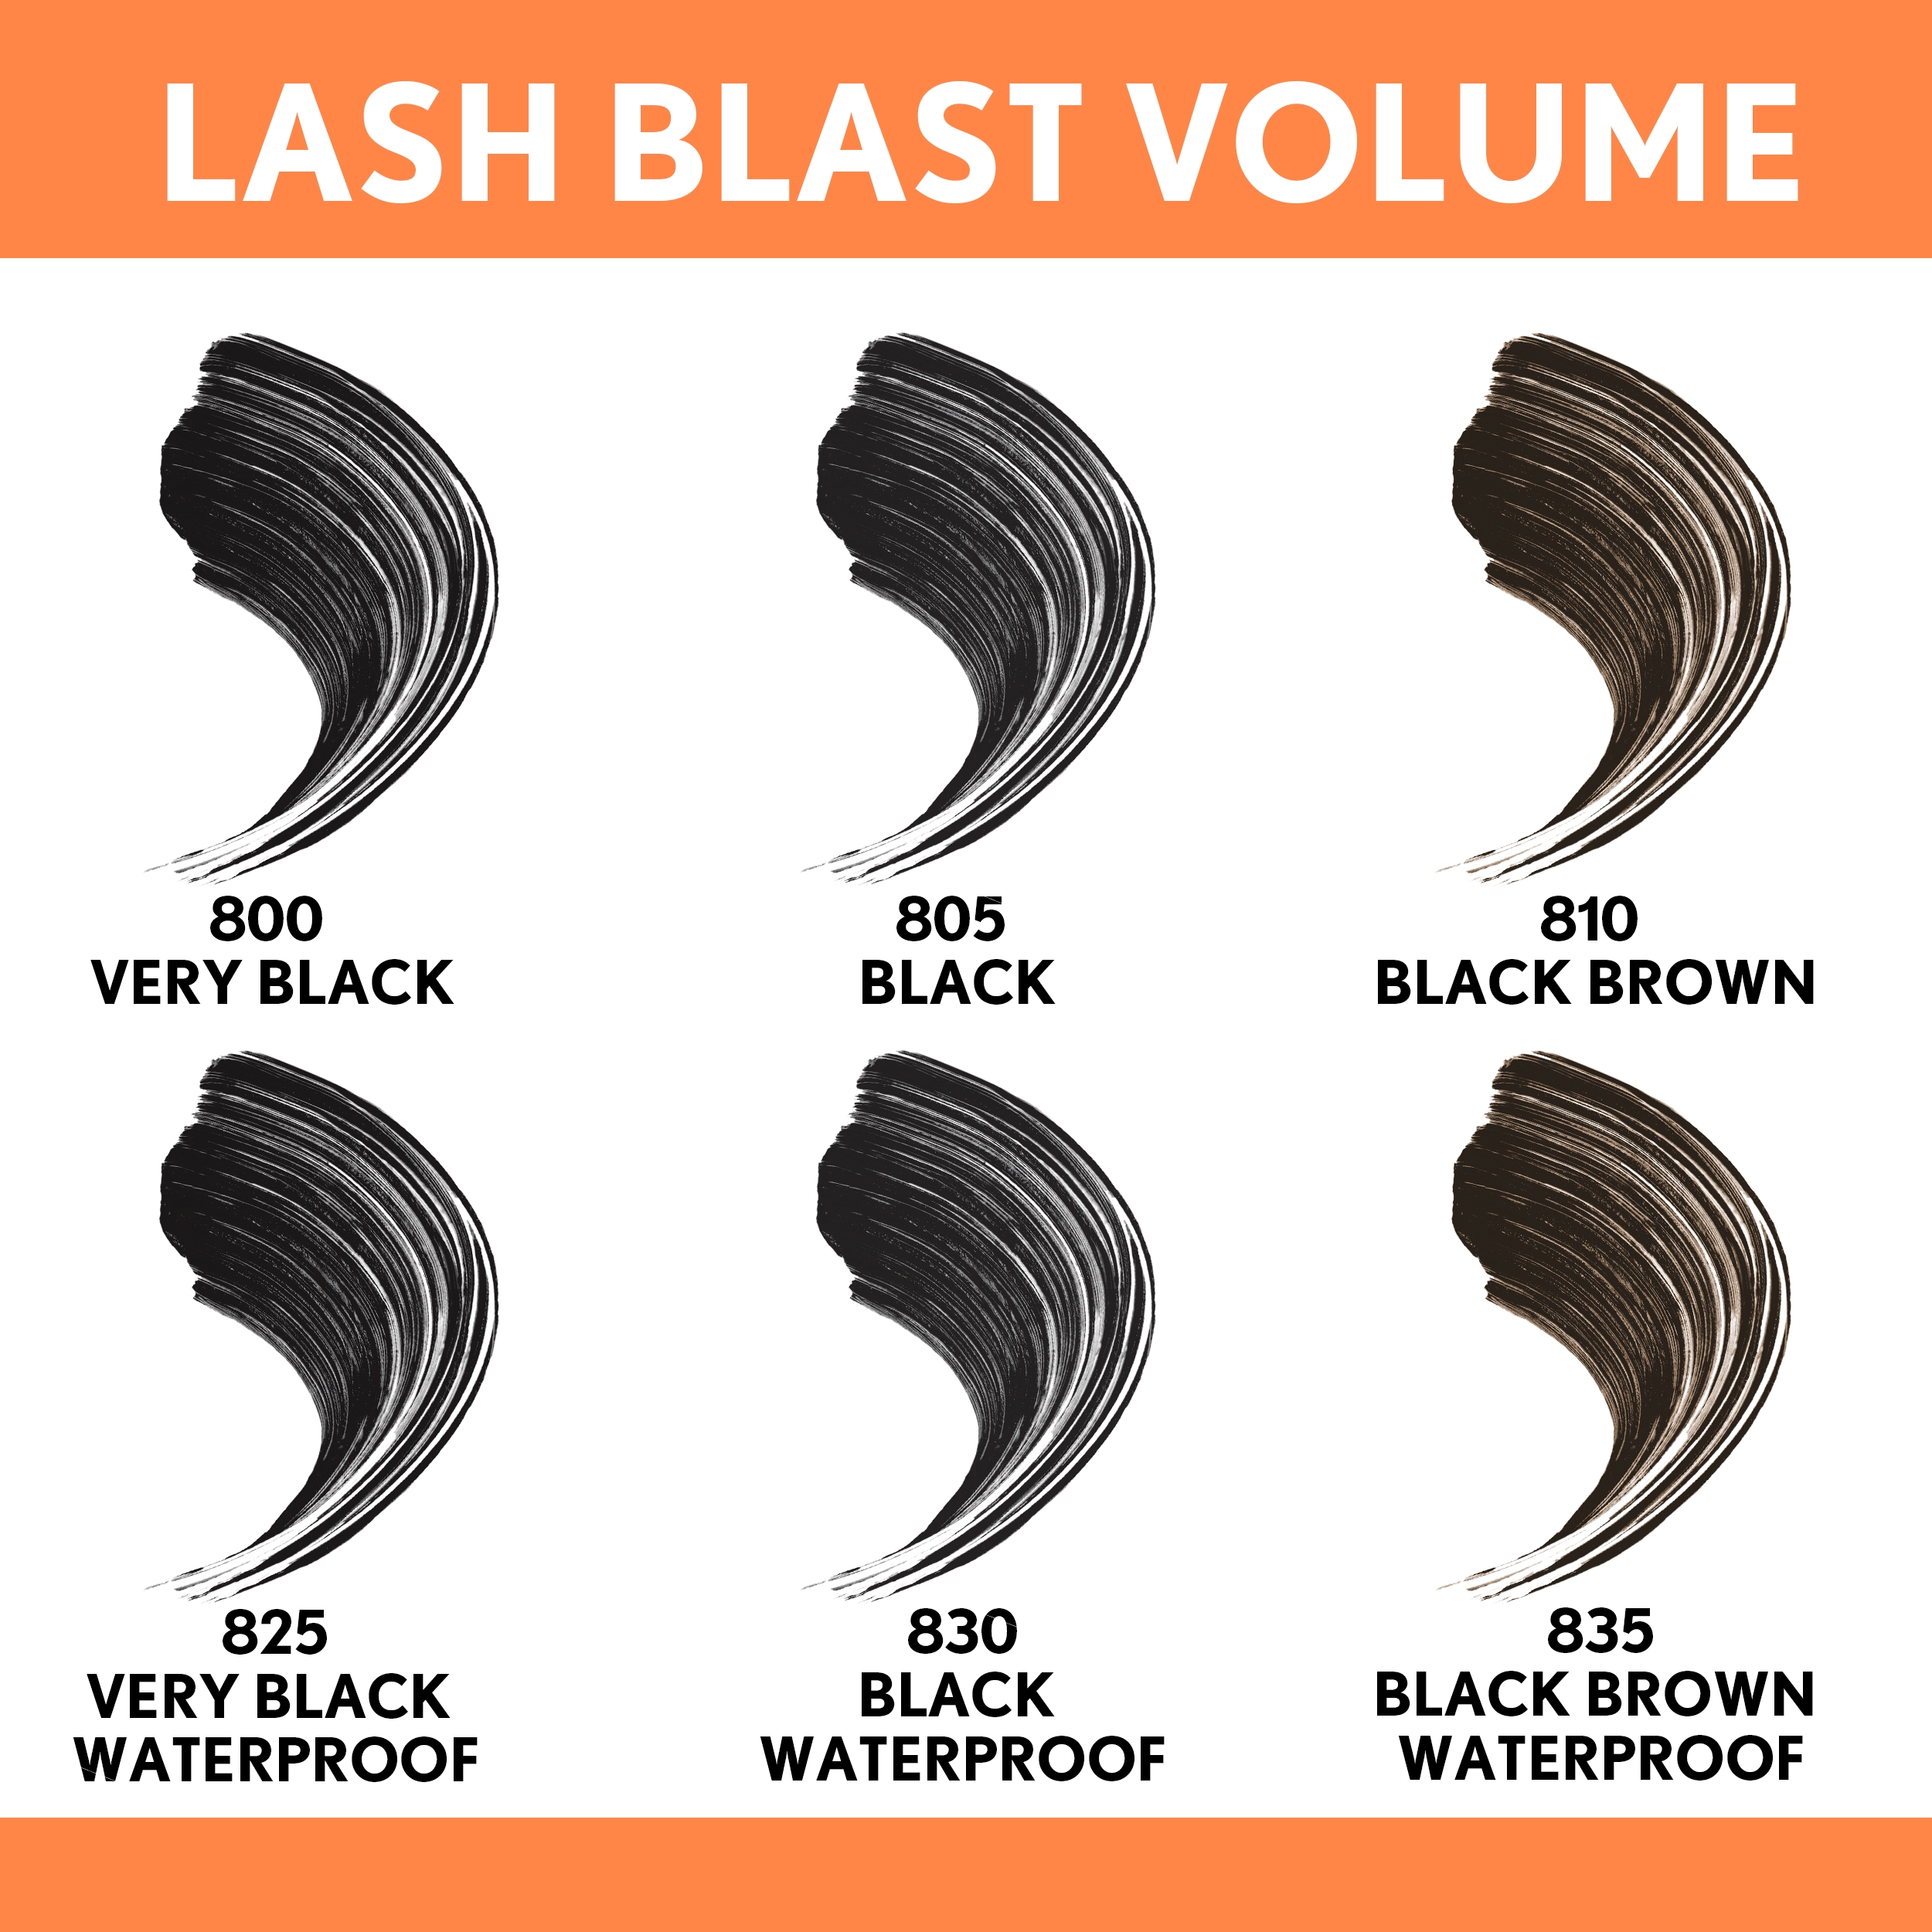 COVERGIRL Lash Blast Volume Waterproof Mascara, 825 Very Black, 0.44 oz, Mascara, Black Mascara, Mascara for Volume, Volume Mascara, Waterproof Mascara, Full Lashes, Hypoallergenic Mascara - image 5 of 14